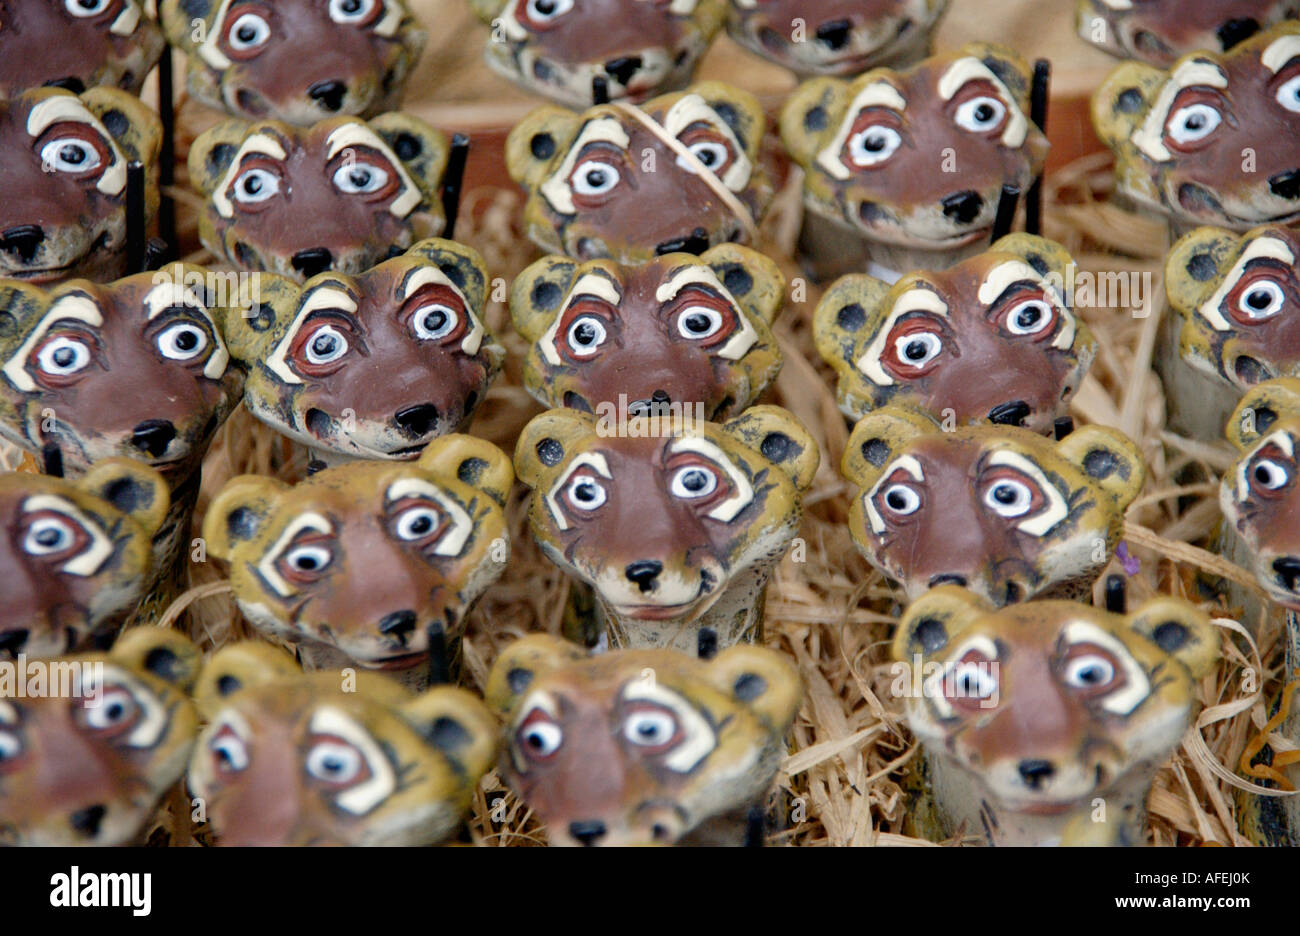 Pottery meerkats on sale in shop UK Stock Photo